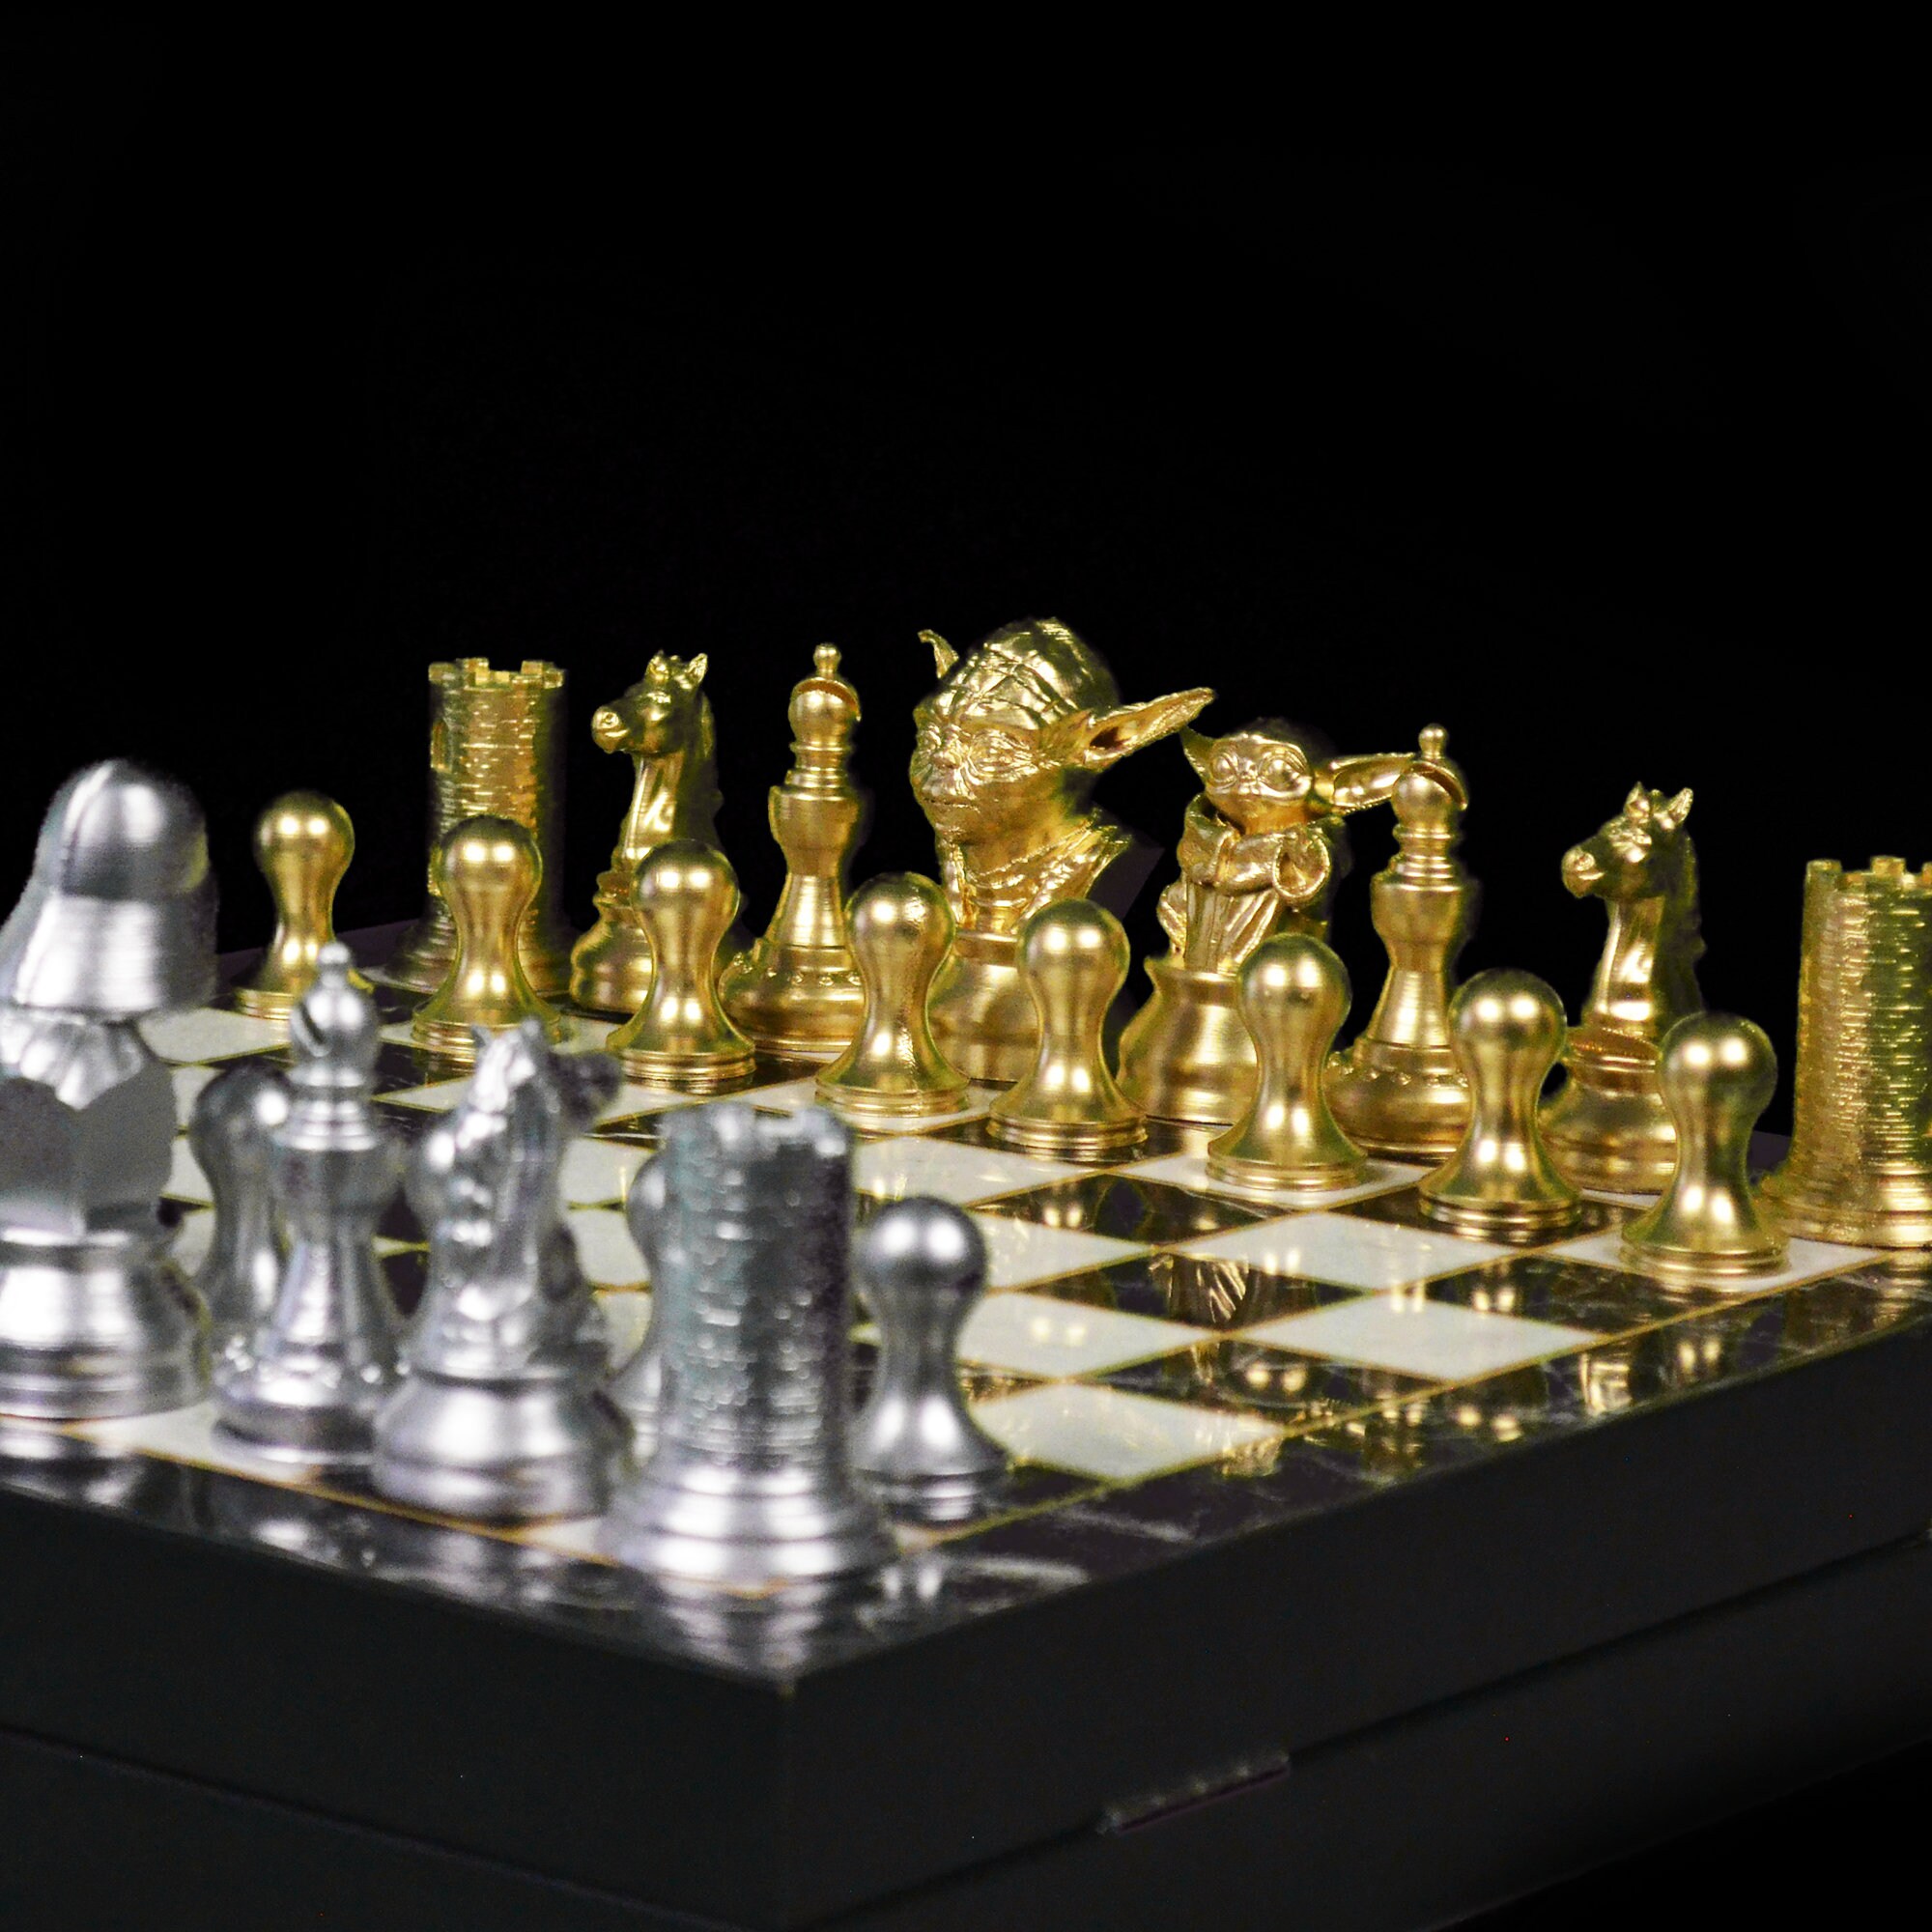 Royal Selangor Classic Star Wars Pewter & Glass Chess Set - M